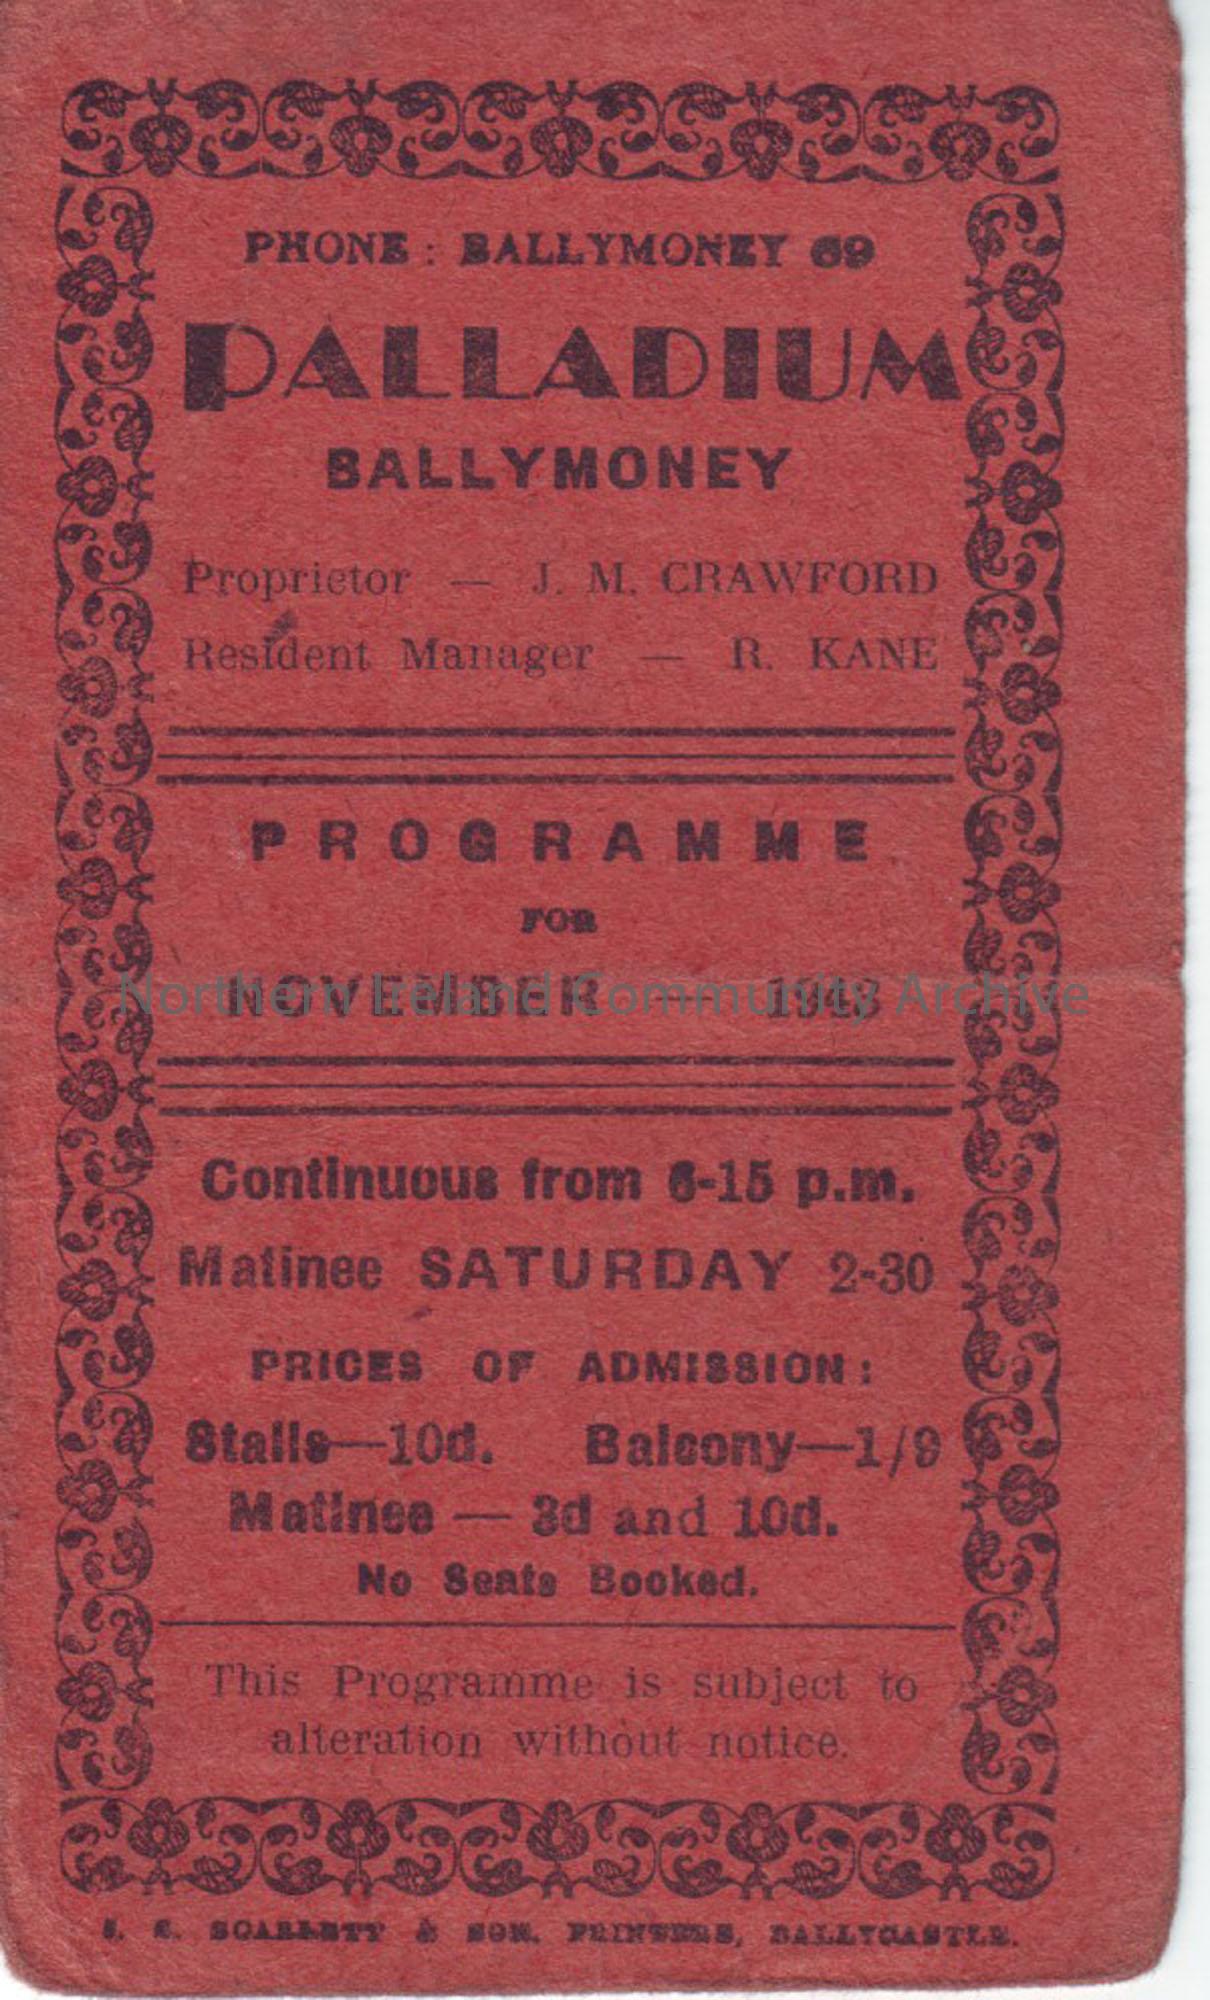 Red programme for Ballymoney Palladium cinema- November 1943